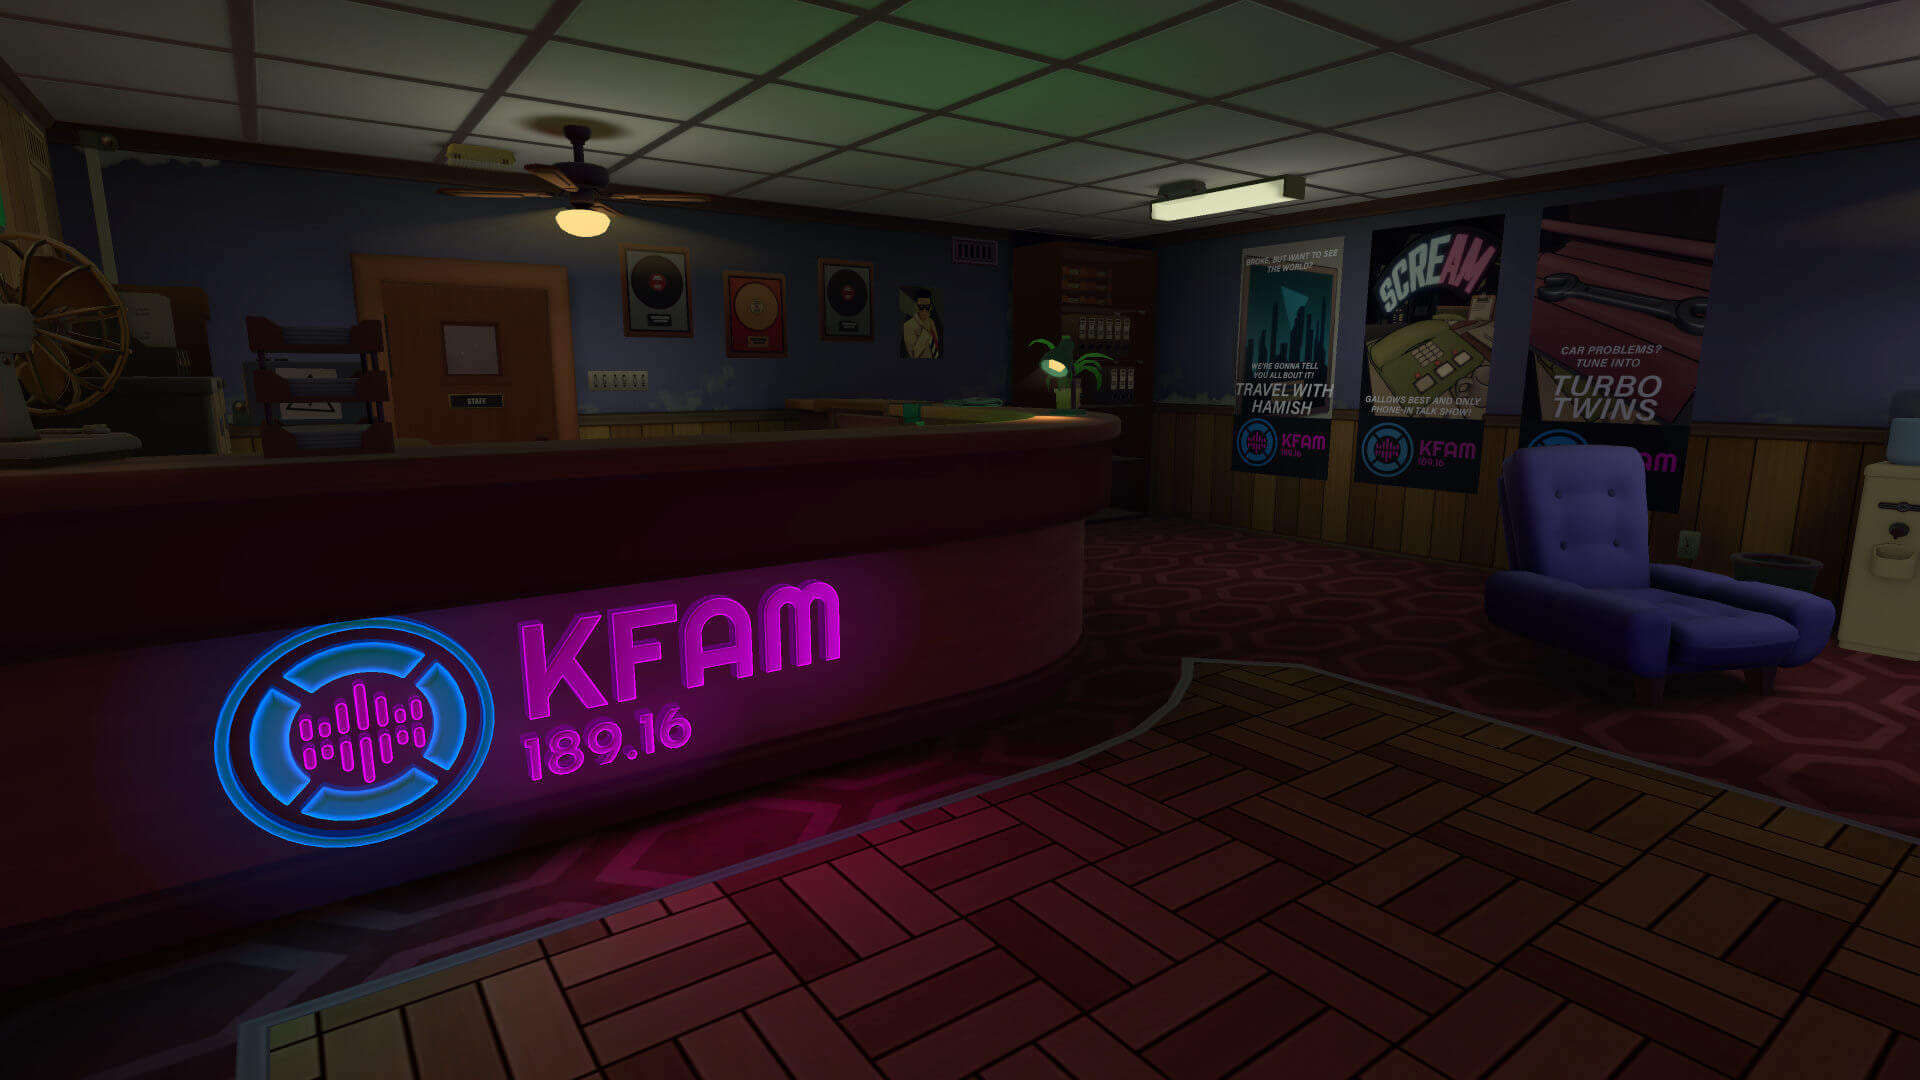 Killer Frequency Radio Station KFAM 189.16